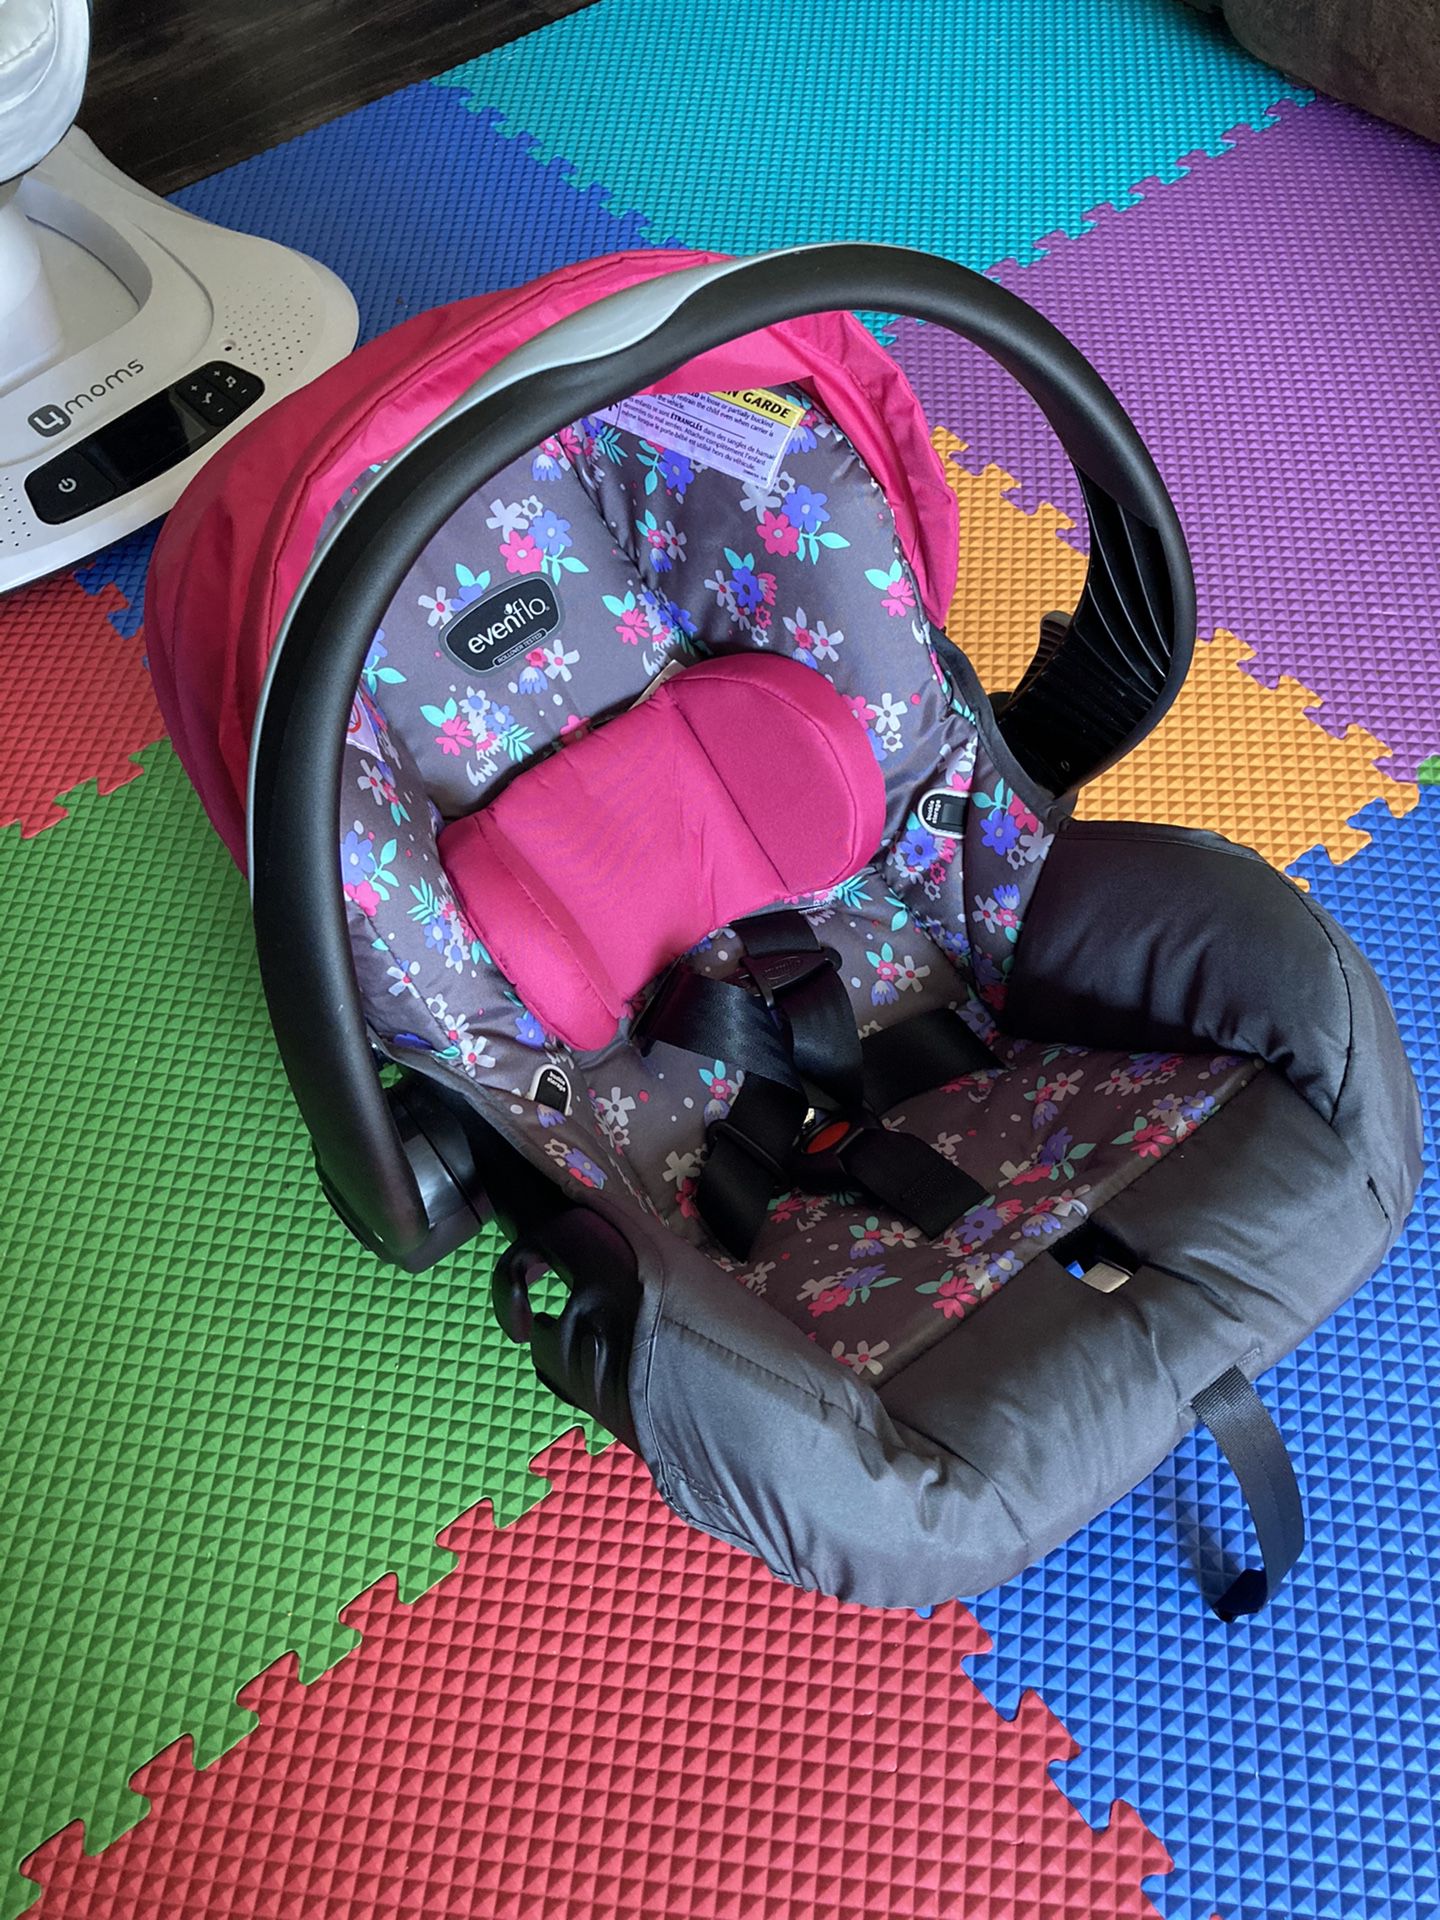 Evenflo Embrace Infant Car Seat - $30